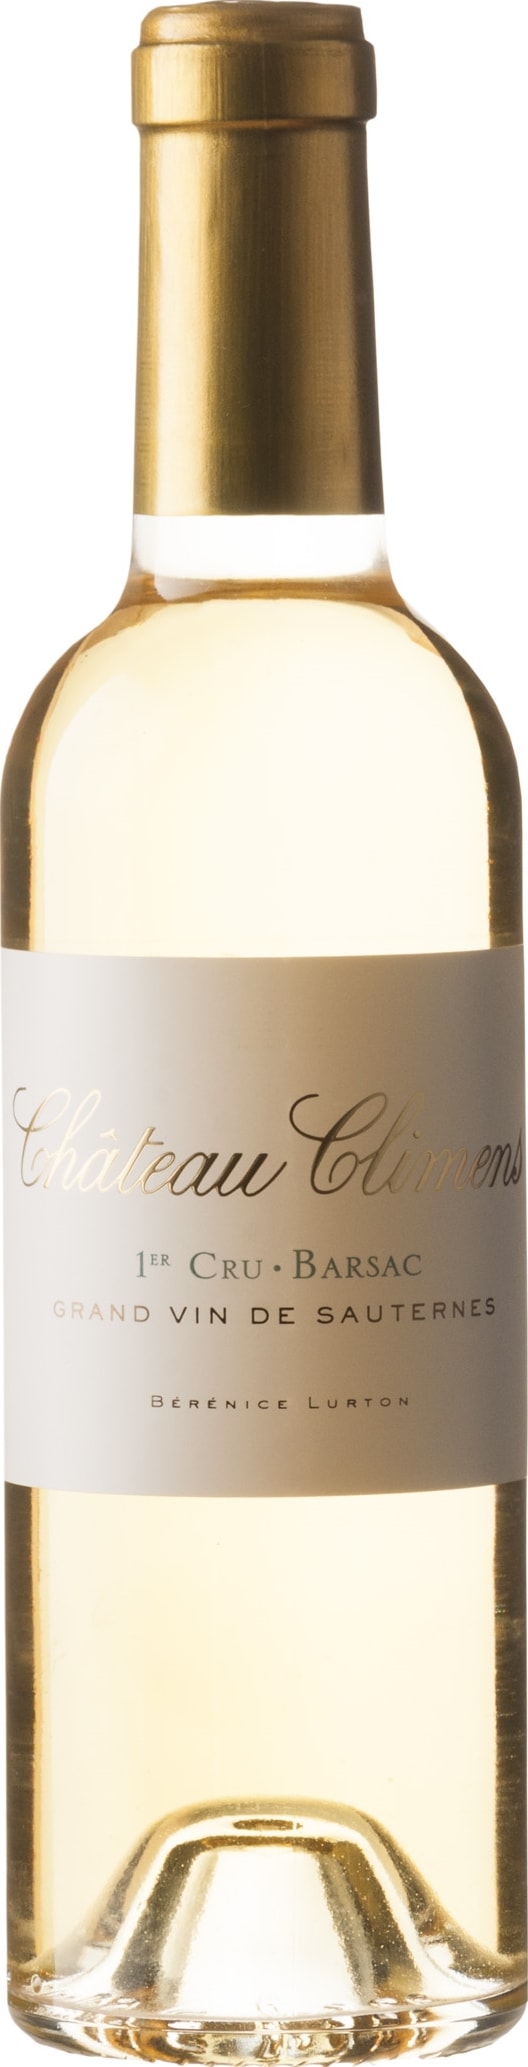 Chateau Climens Barsac Premier Grand Cru Classe 2011 37.5cl - Buy Chateau Climens Wines from GREAT WINES DIRECT wine shop